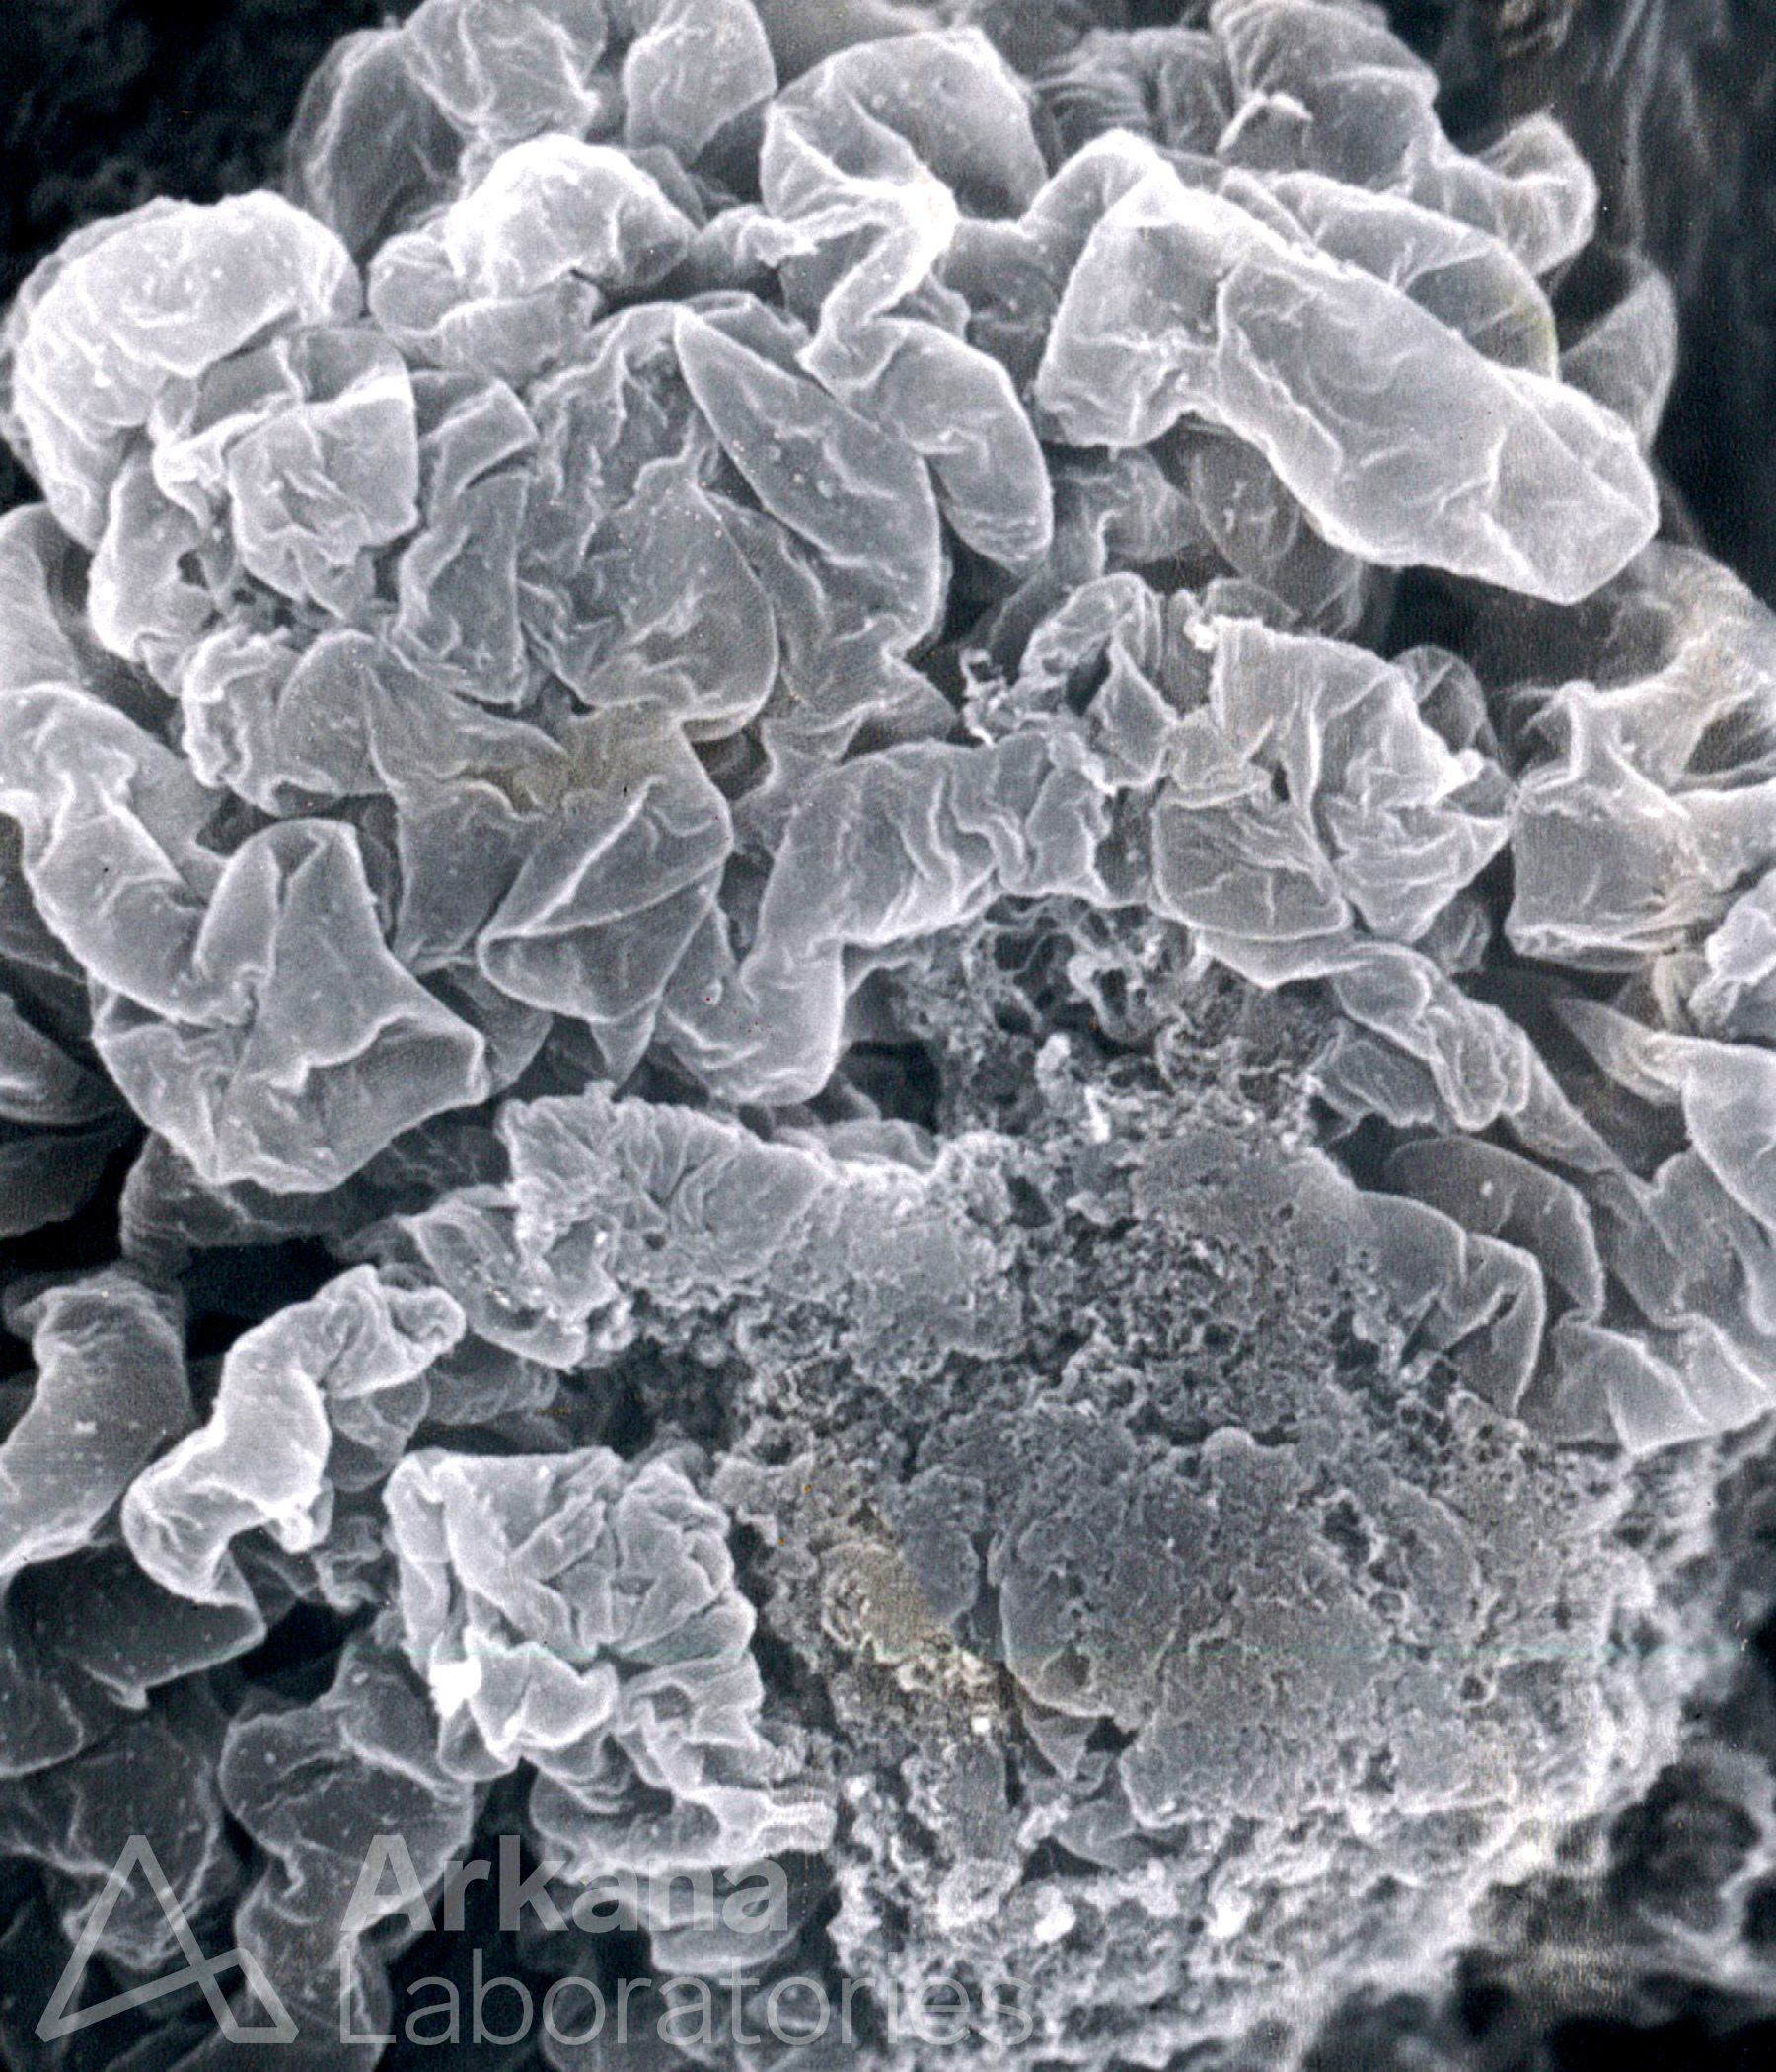 Normal Glomerular Tuft with Segmental Necrosis, eyeSCANdy, Arkana Laboratories